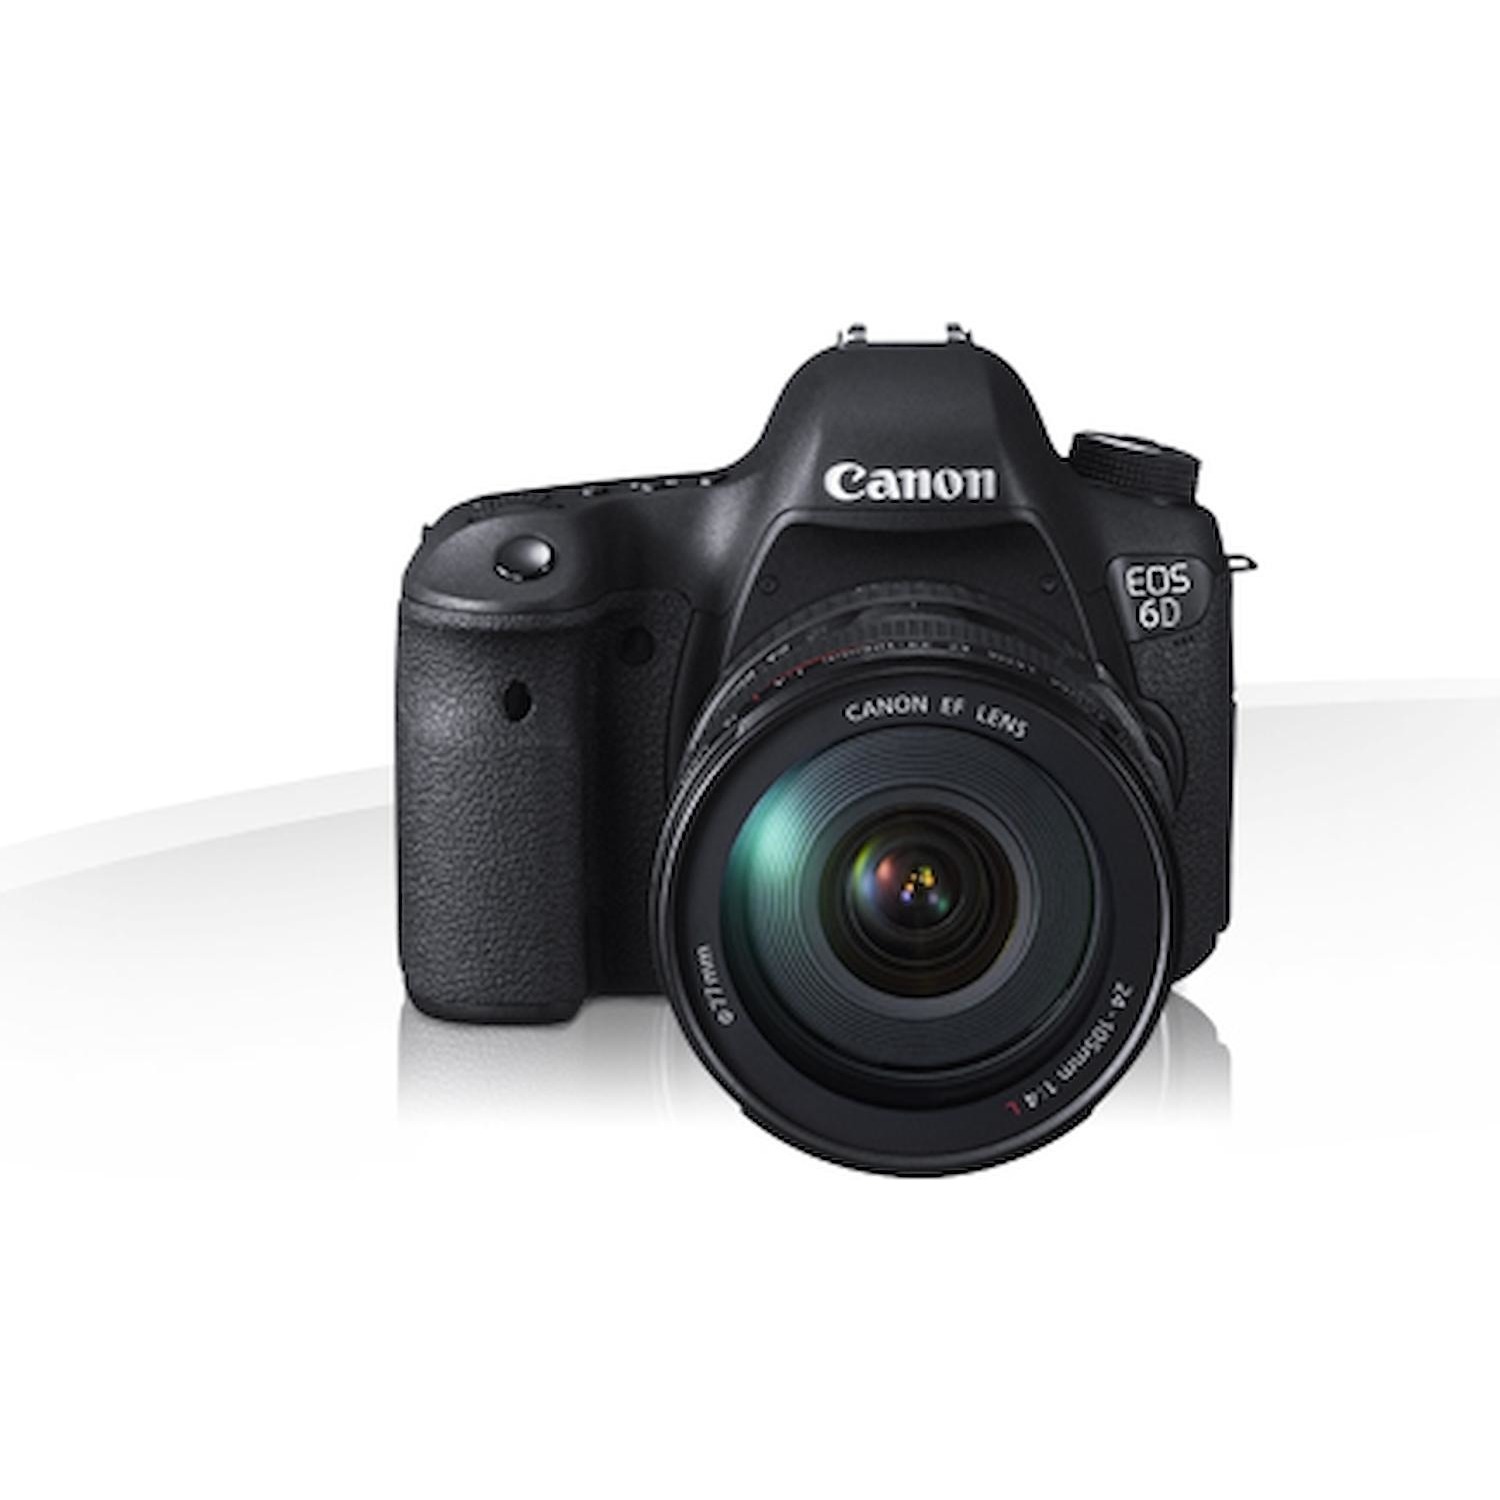 Immagine per Fotocamera Reflex Canon 6D BODY                   Sensore FULL Frame da 20.2 megapixel da DIMOStore